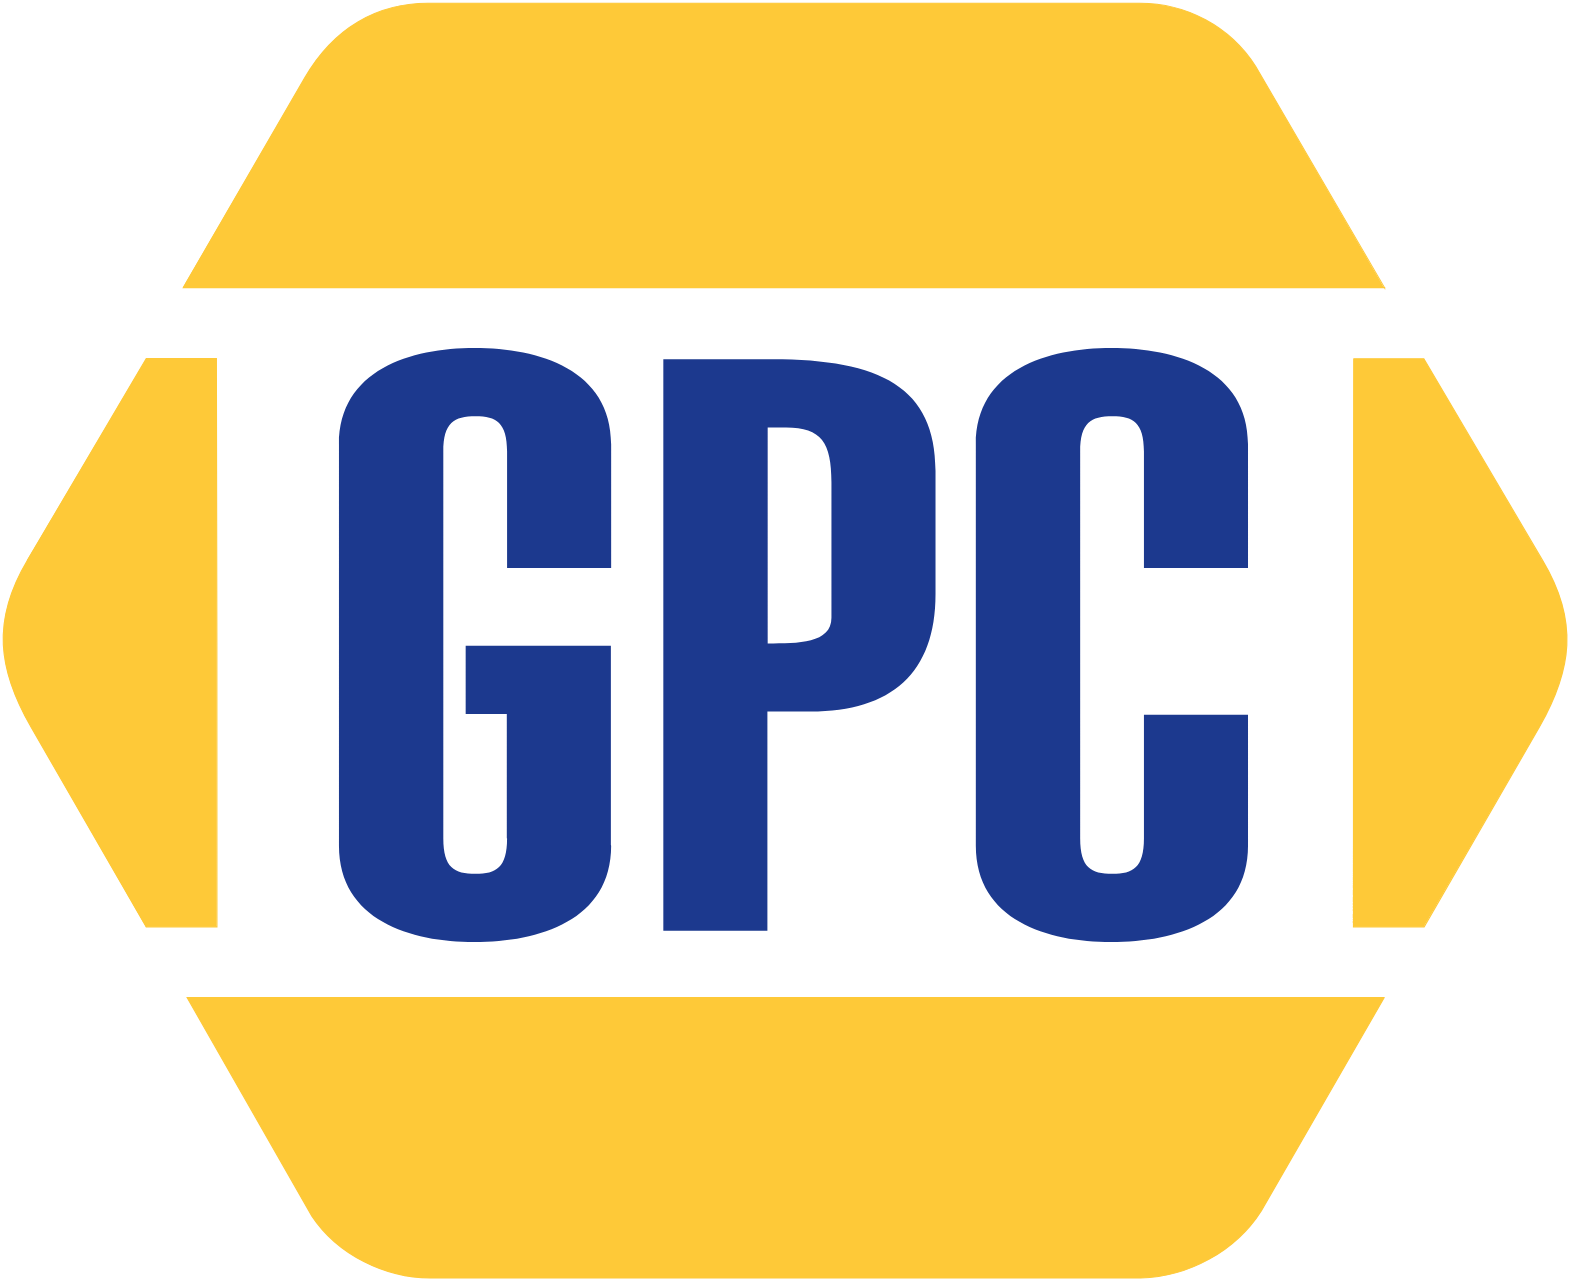 Genuine Parts Company
 logo large for dark backgrounds (transparent PNG)